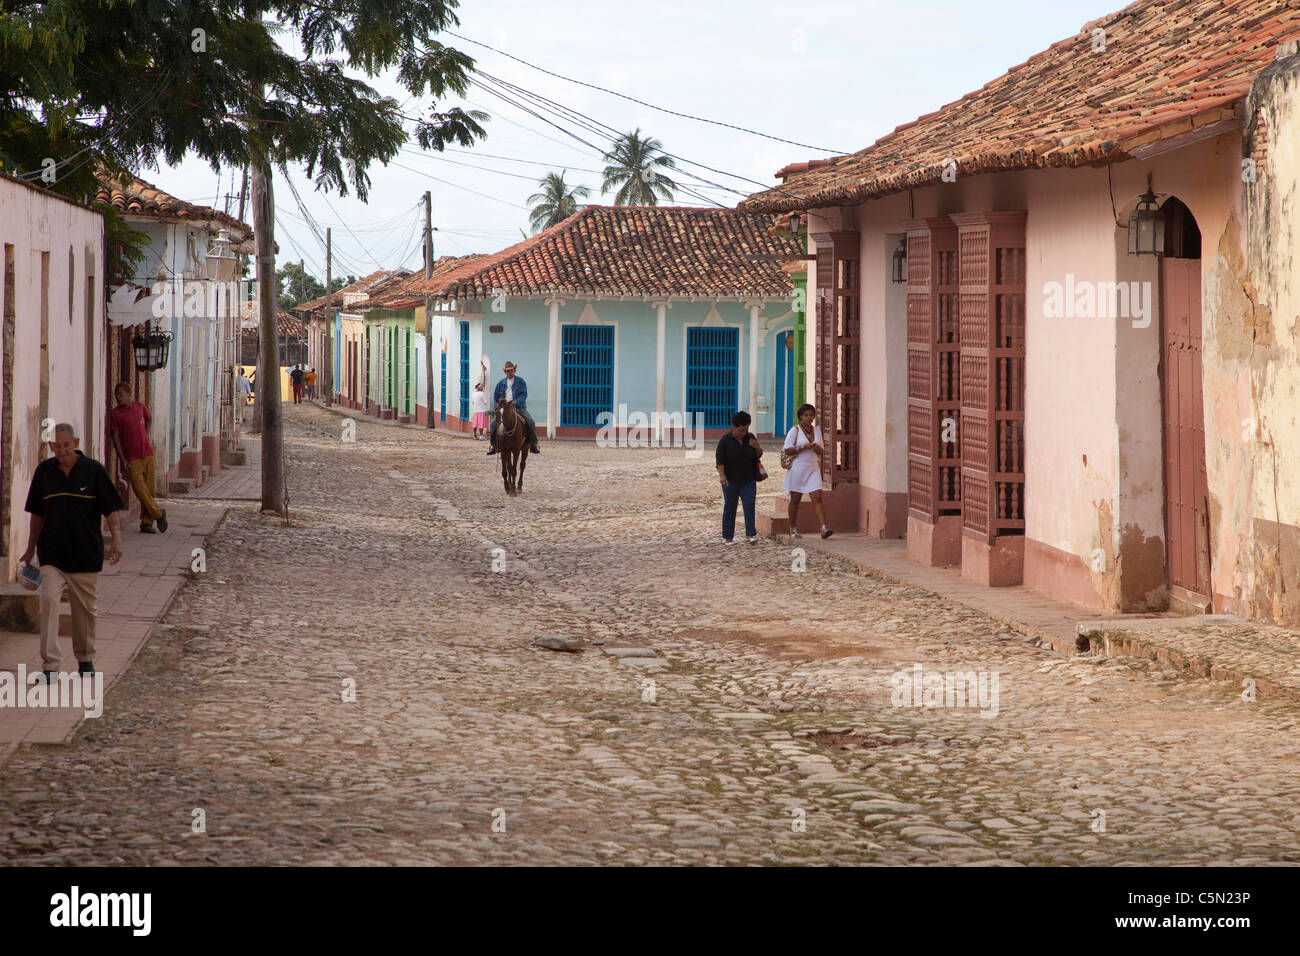 Cuba, Trinidad. Late Afternoon Street Scene. Man on Horseback. Stock Photo